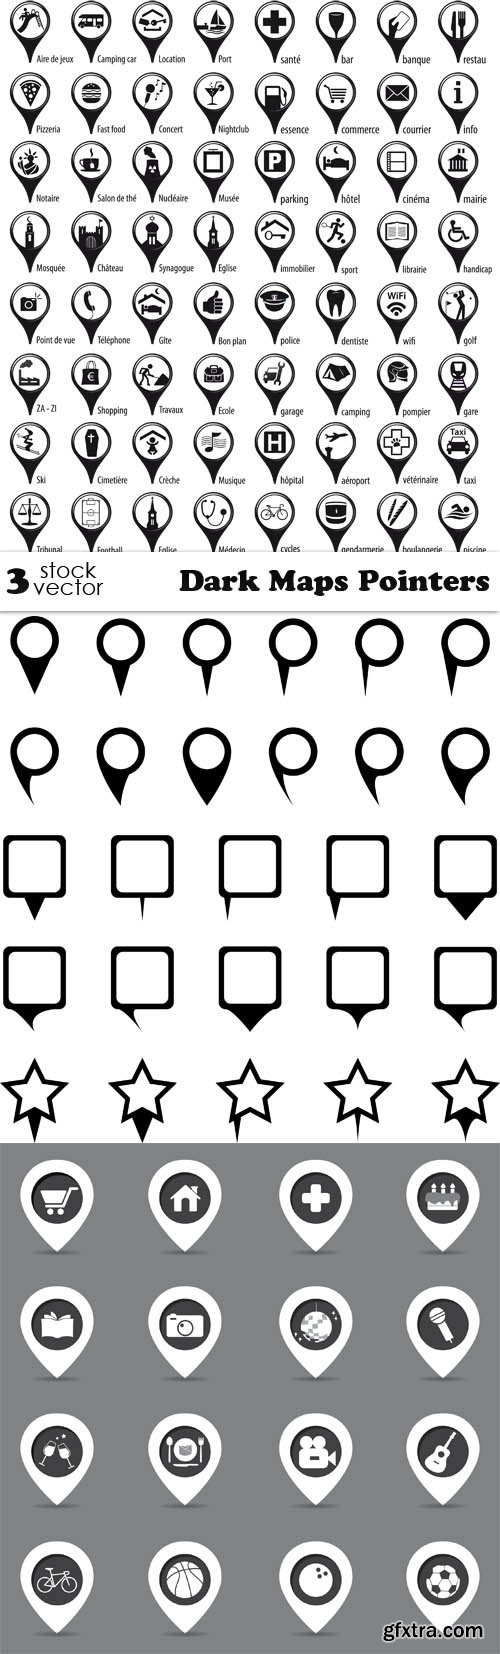 Vectors - Dark Maps Pointers